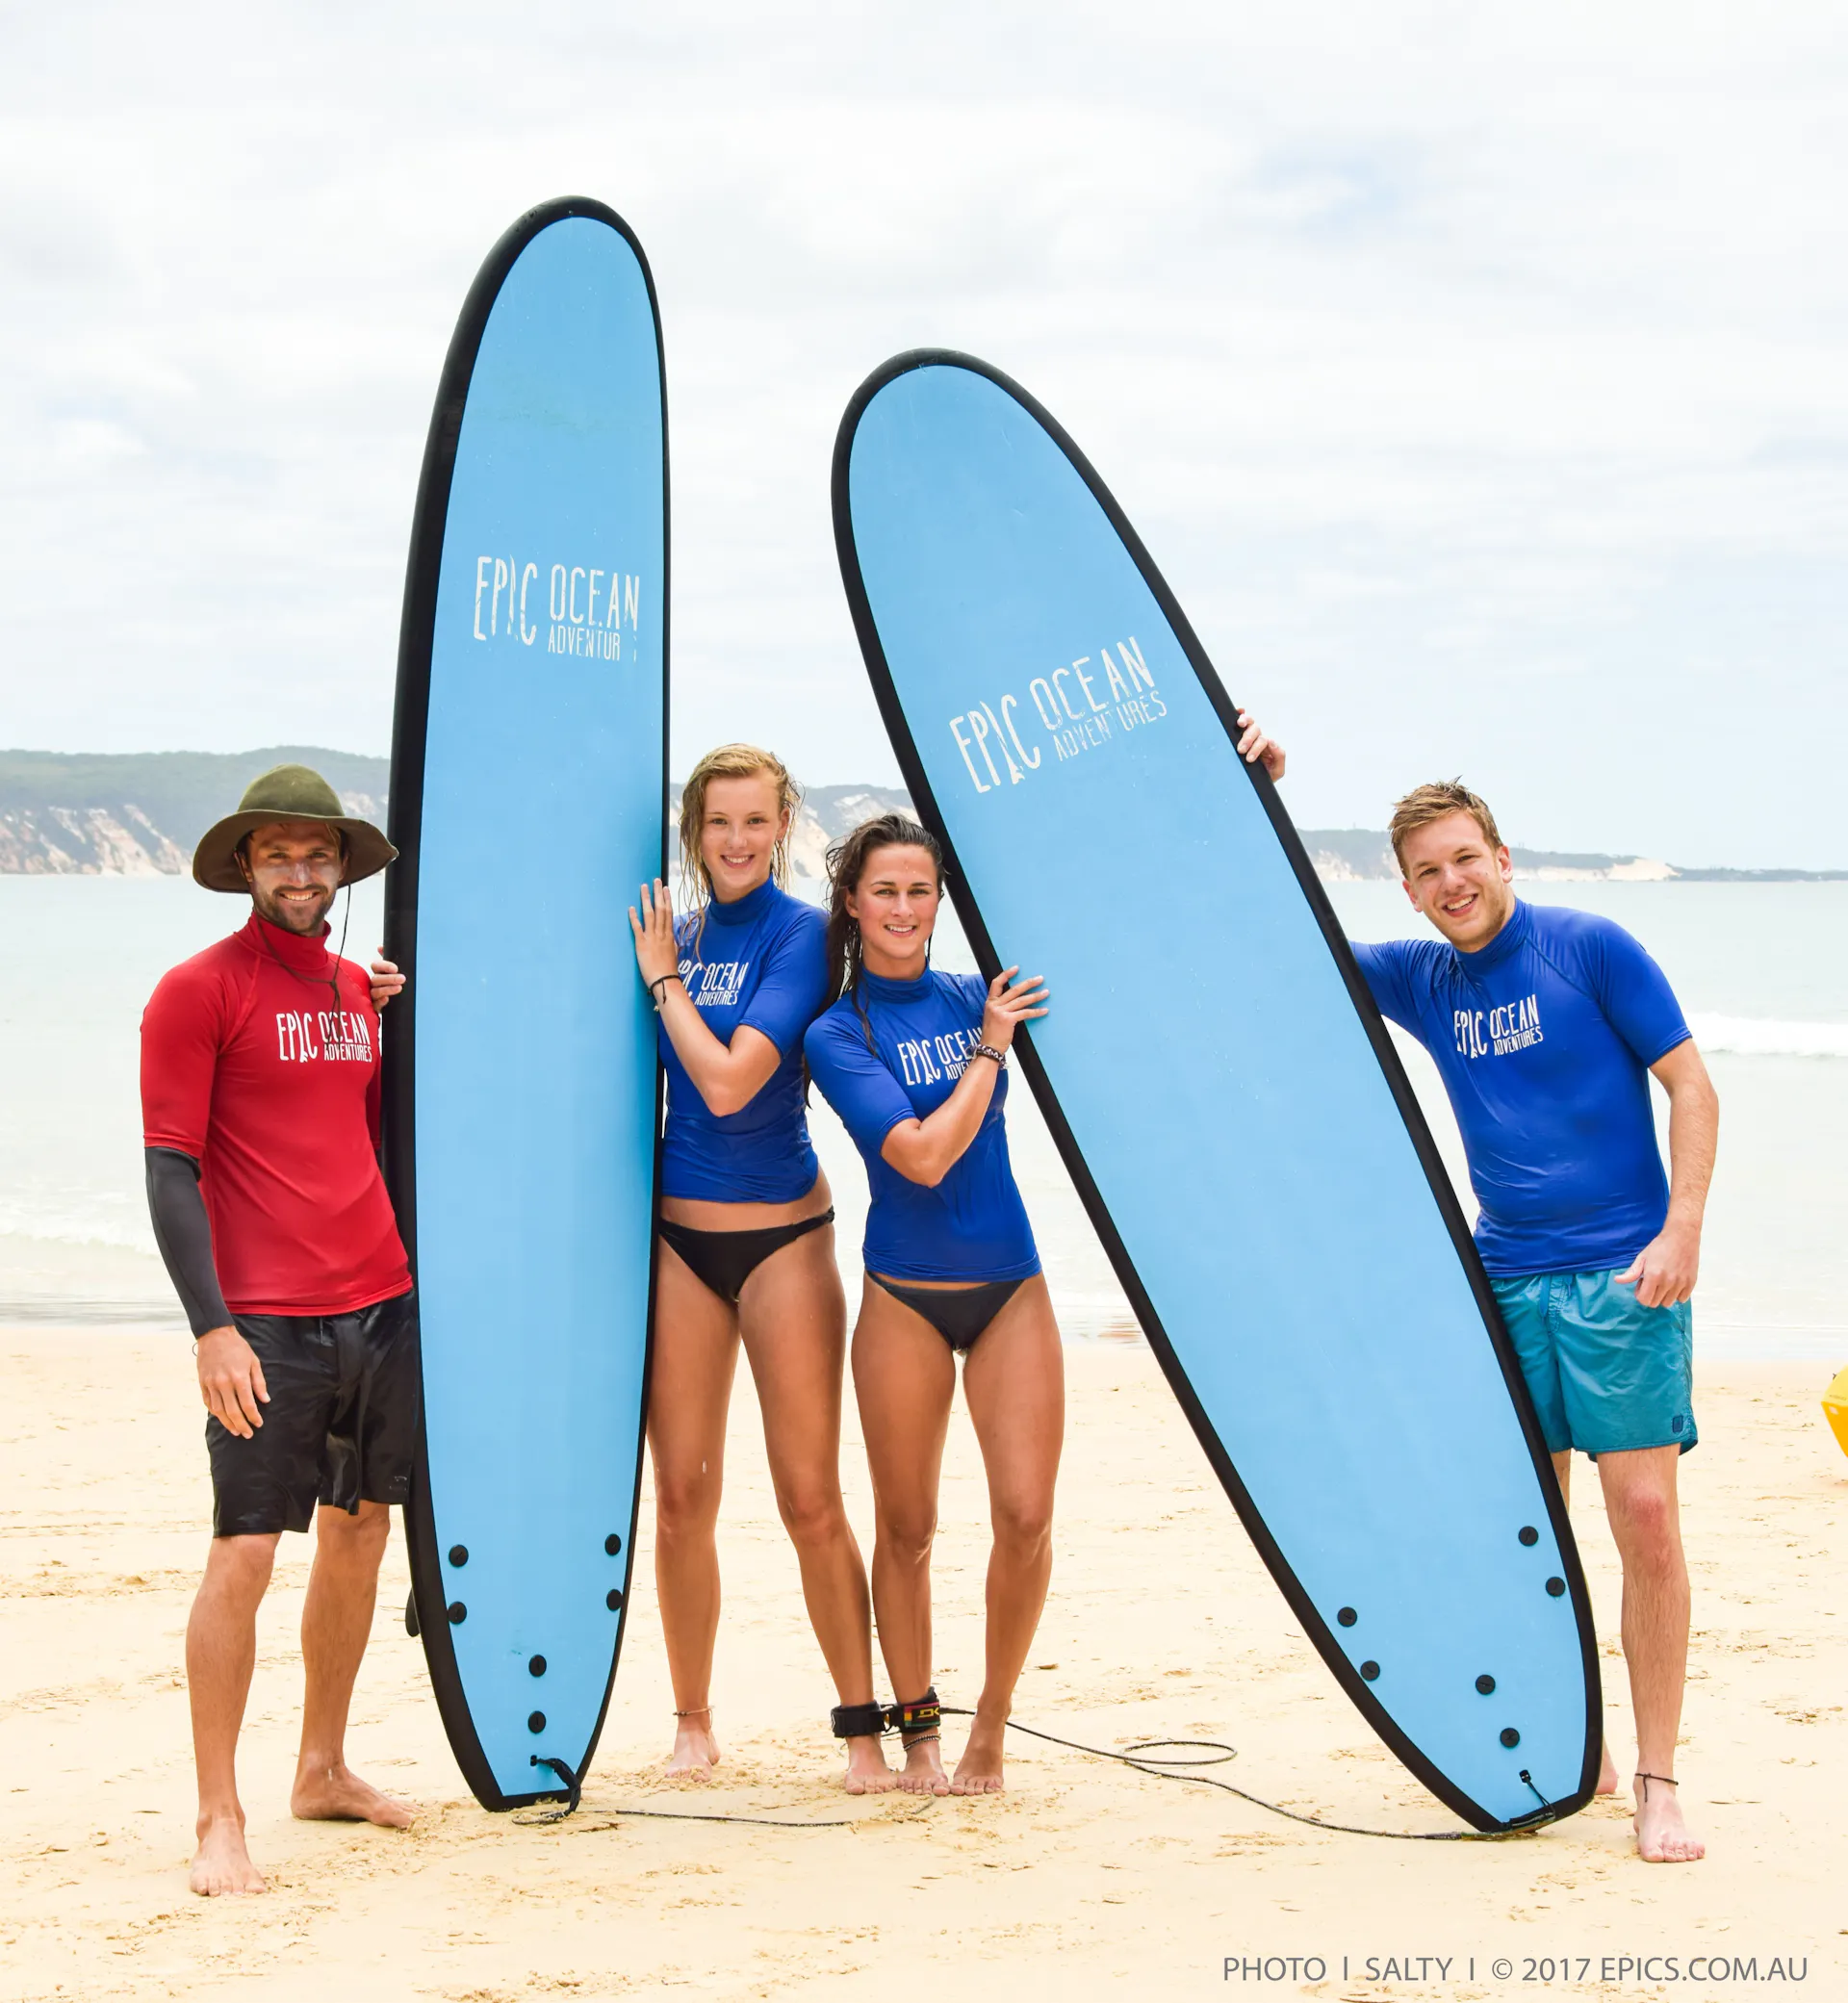 Come Surf Australia's Longest beginner wave